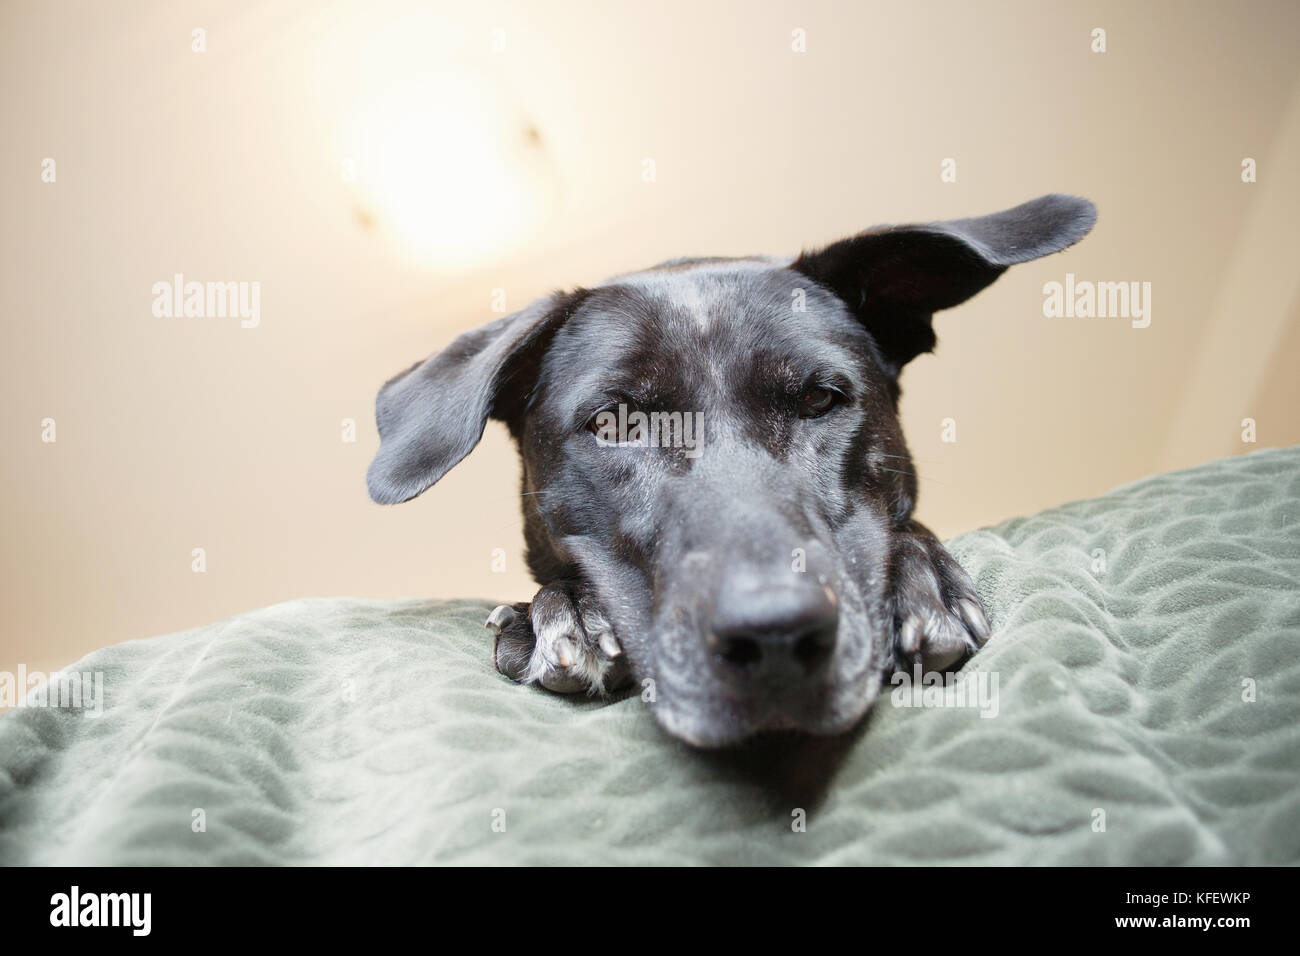 Big dog on bed. Stock Photo